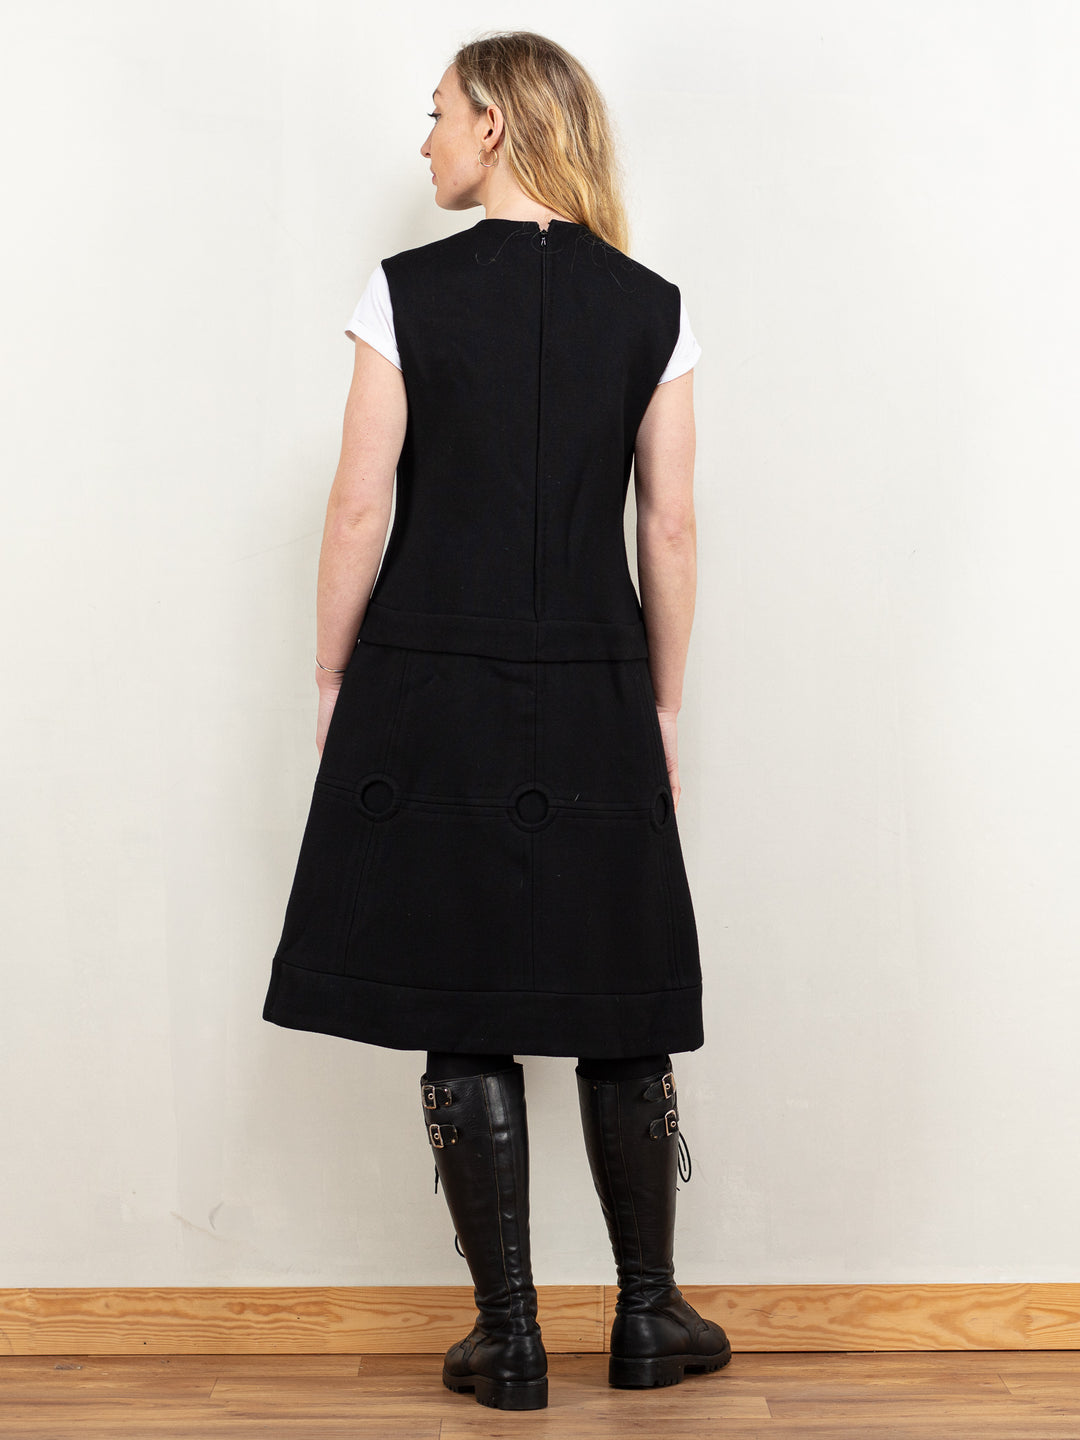 60's Mod Dress vintage shift dress black wool blend flare sleeveless collage retro throwback twiggy eddie sedgwick dress size extra small XS